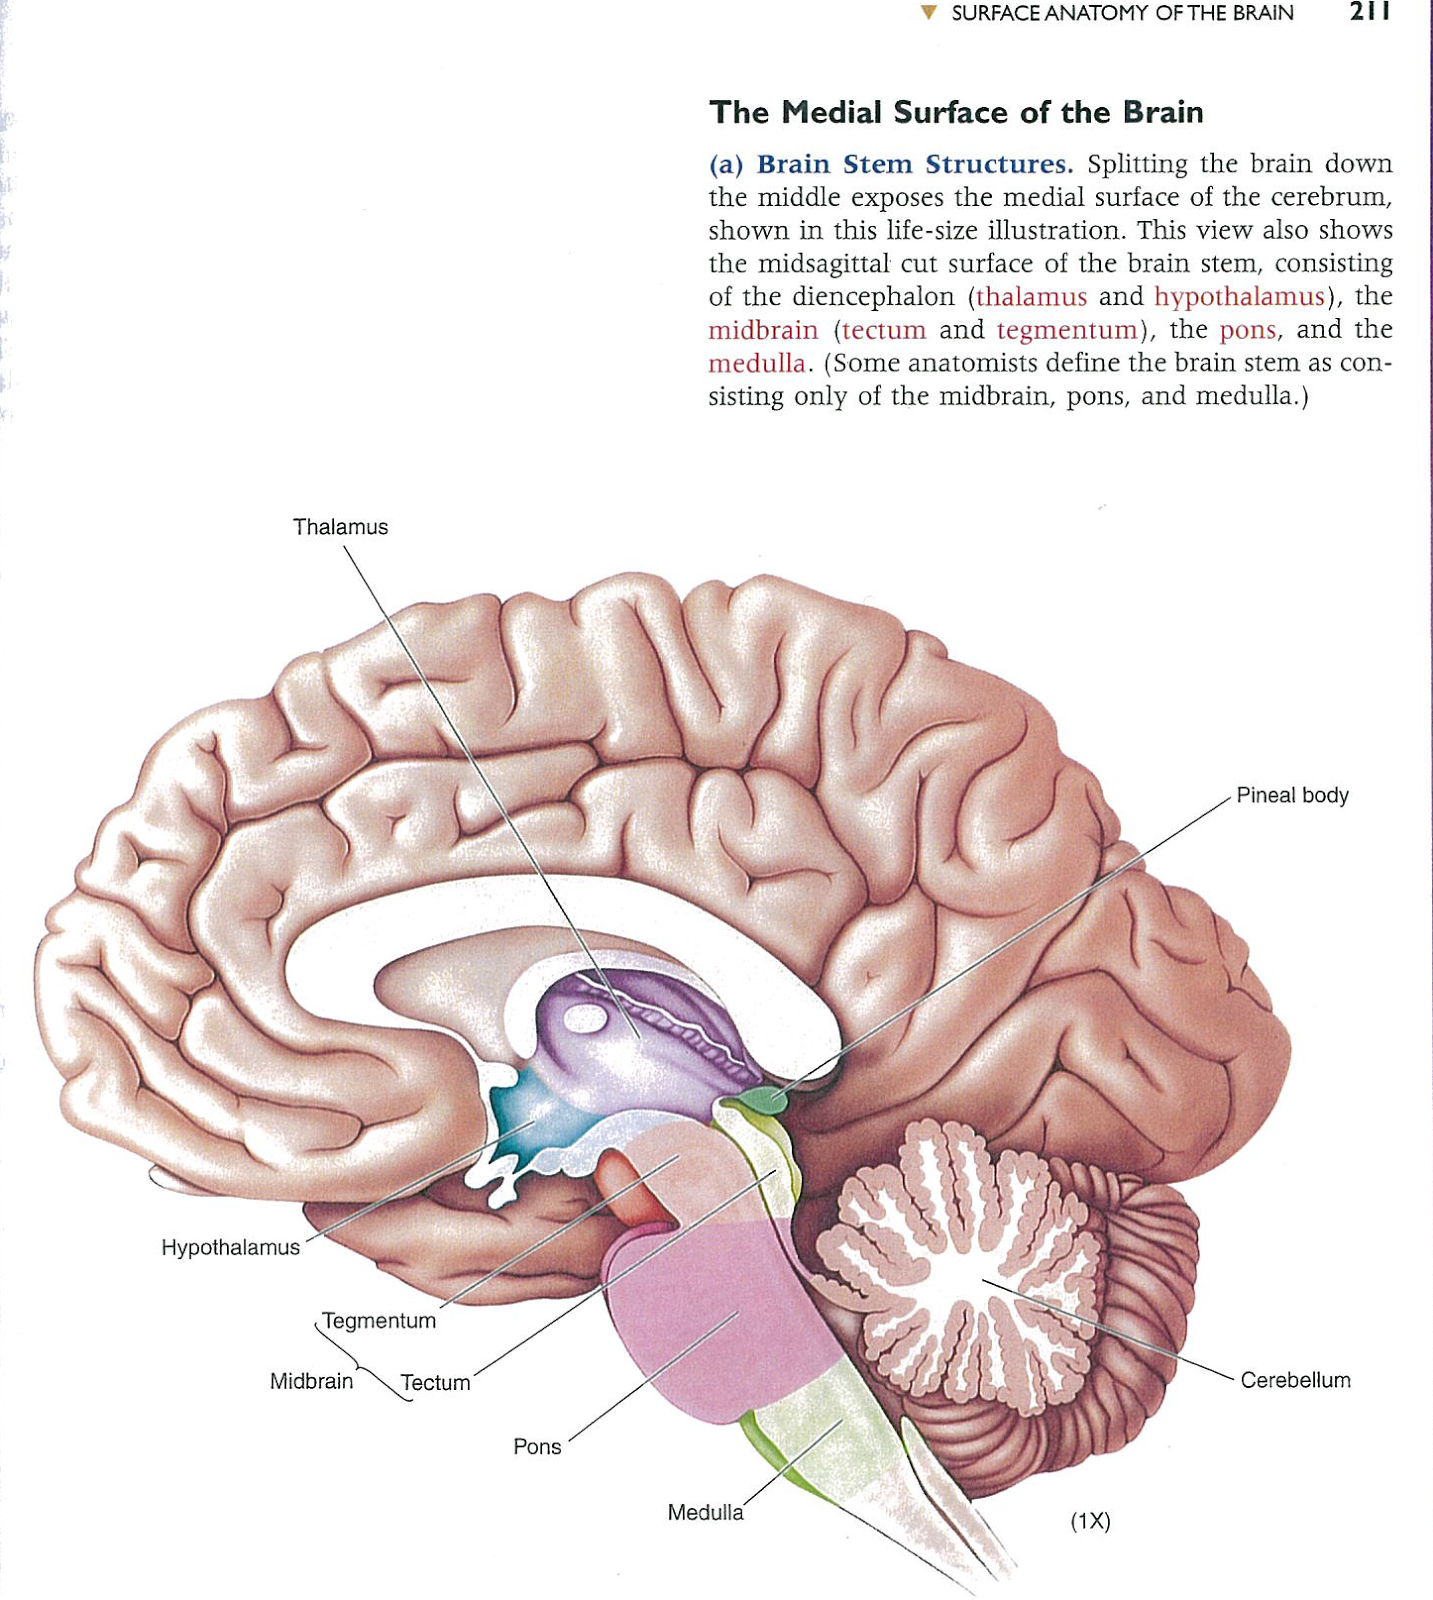 Brains down. Medial surface of the Brain. Мезенцефалон диэнцефалон. Anterior surface of the brainstem. Анатомия таламус и бледный шар.